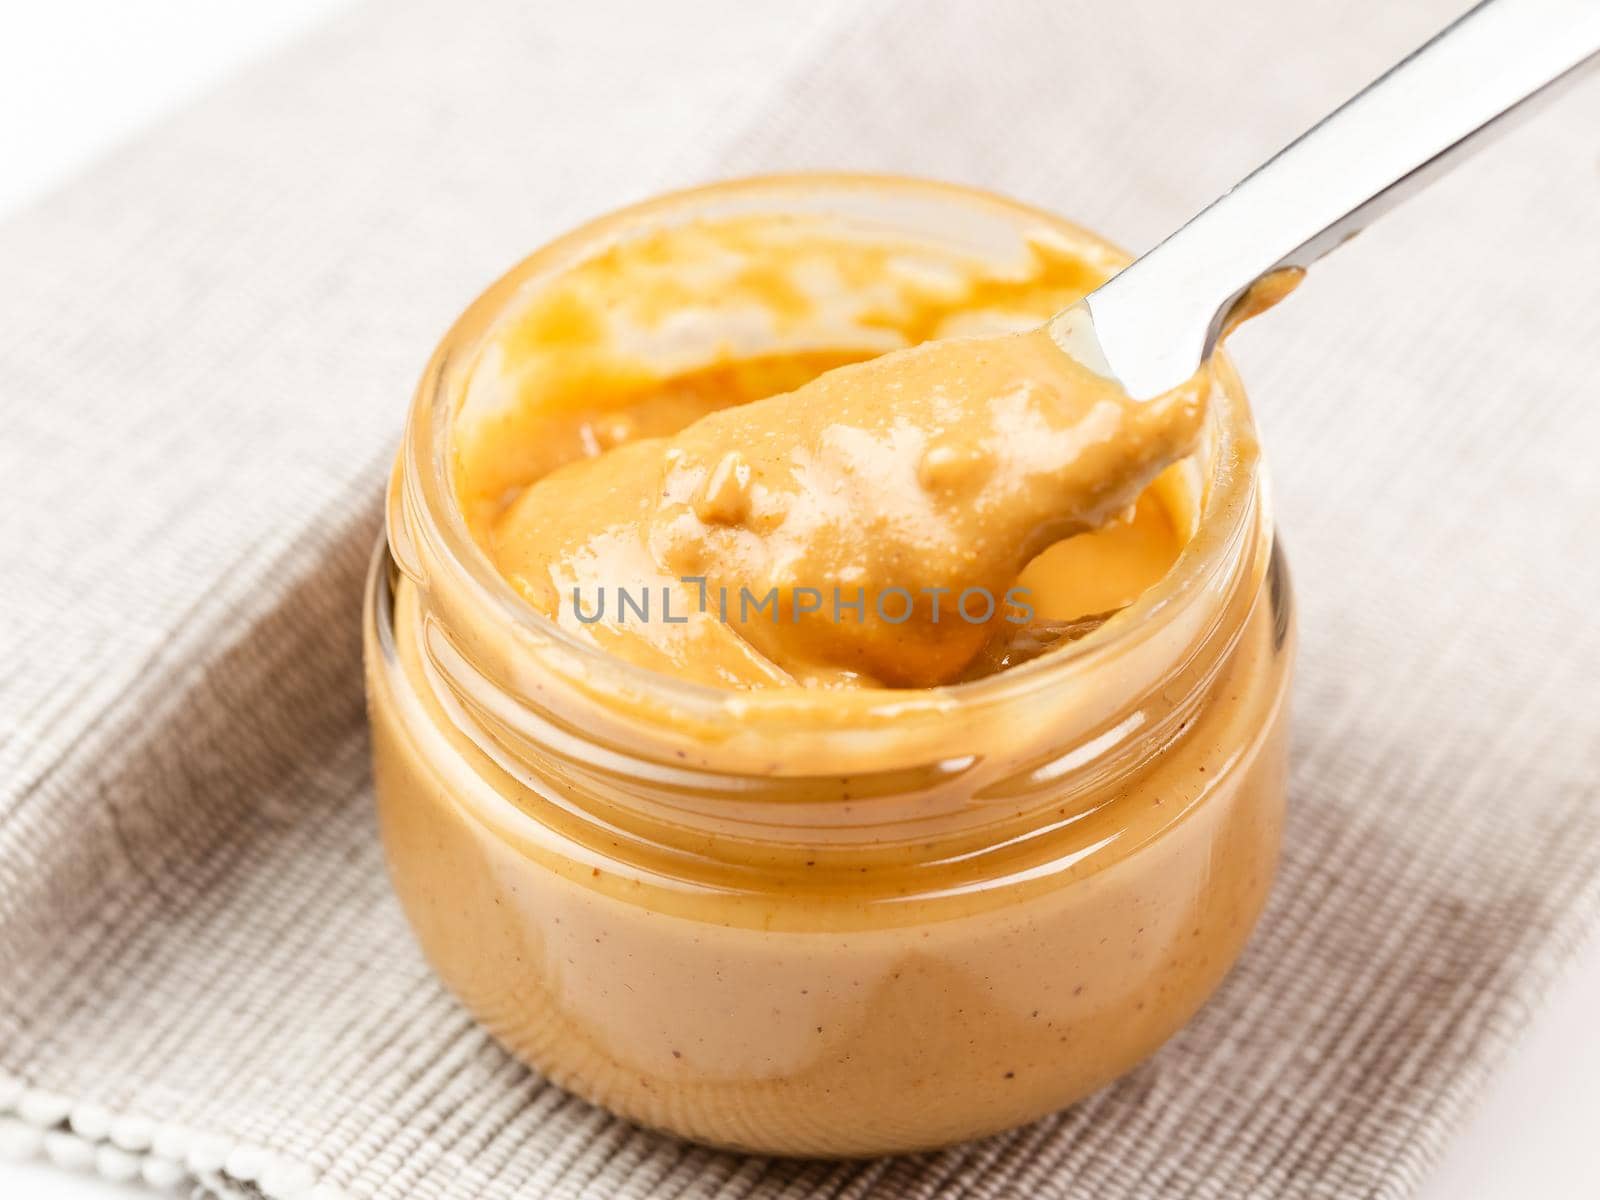 Crunchy peanut butter in a glass jar by Syvanych